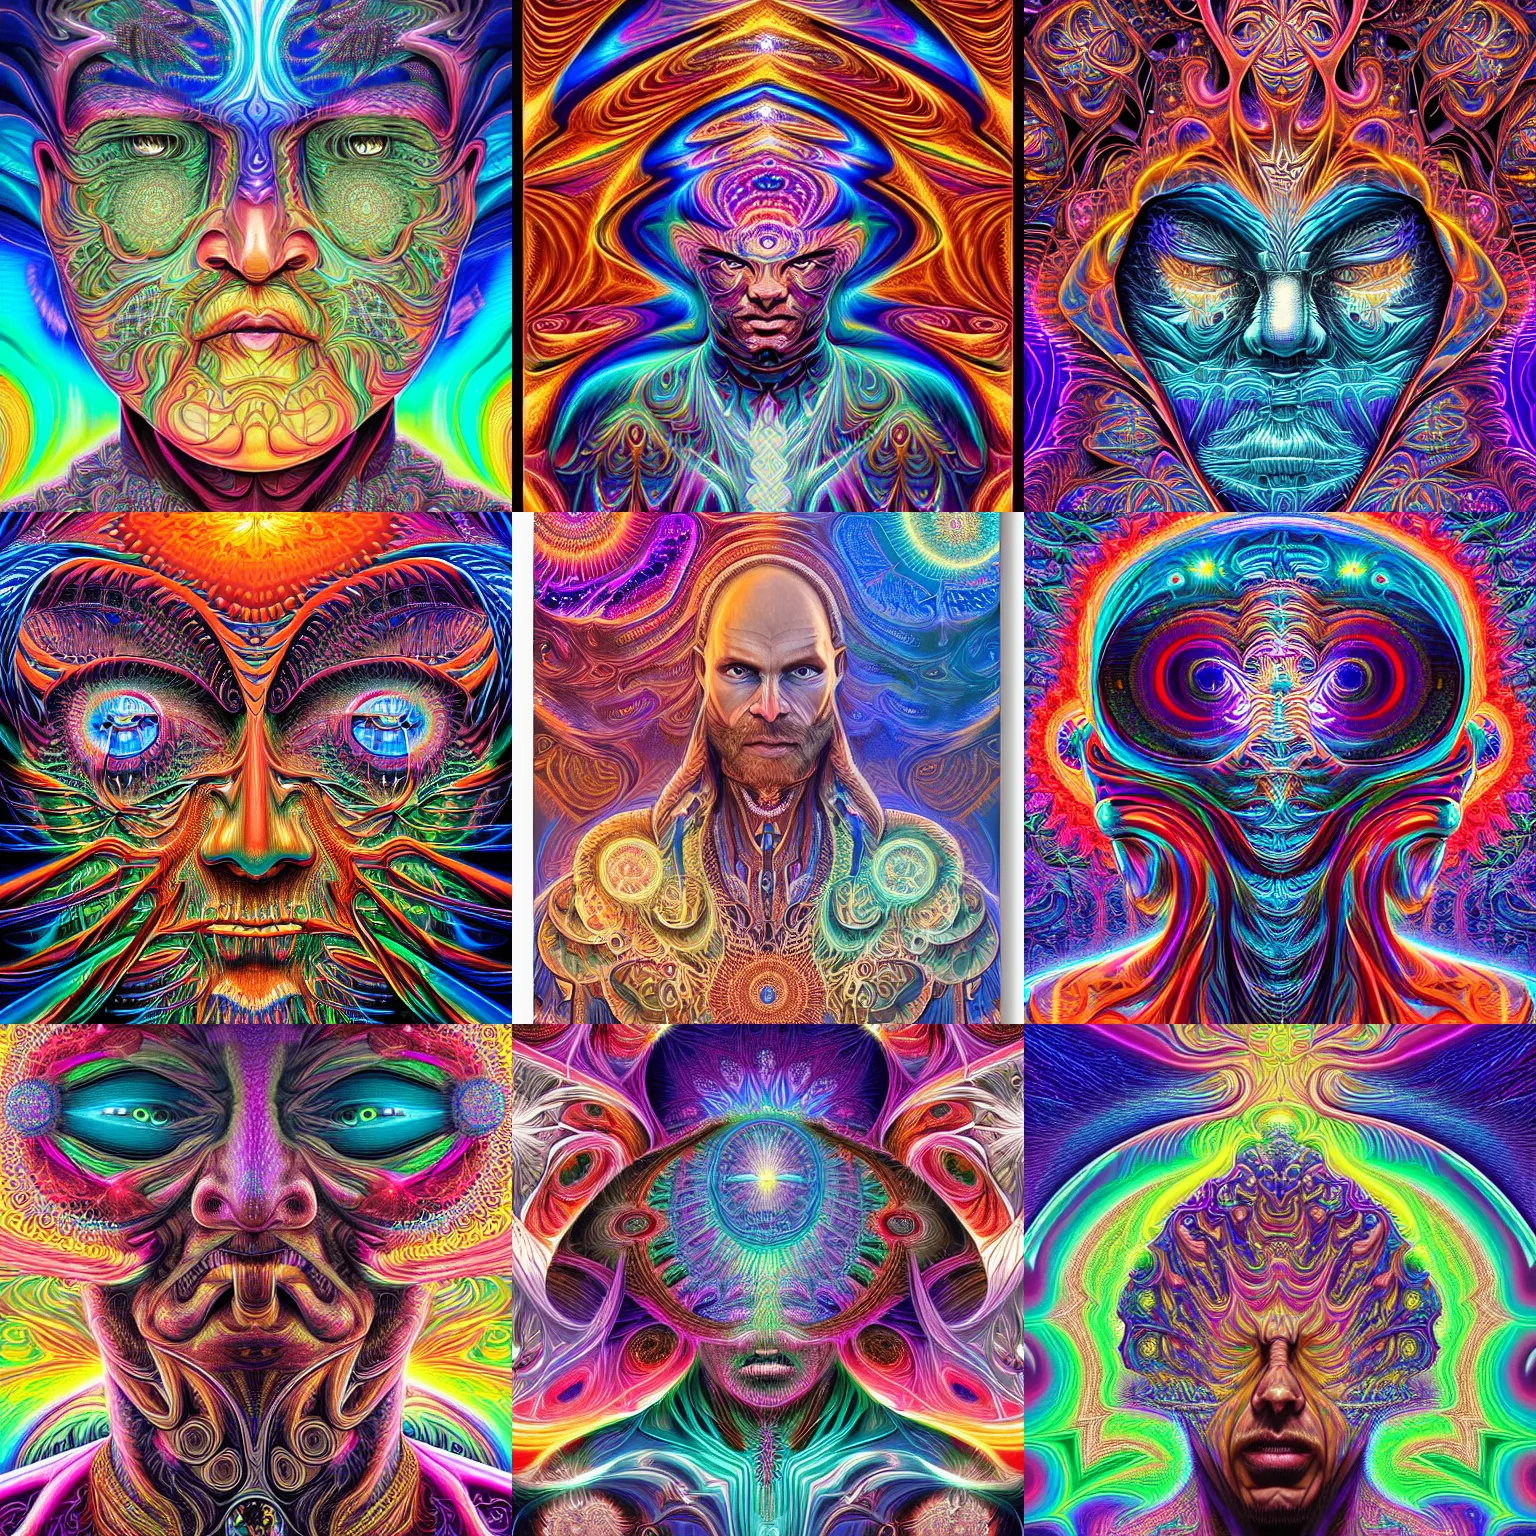 Prompt: a beautiful digital art of a intricate ornate cosmic fractal shaman by dan mumford and alex grey hd vibrant 3 d ue 4